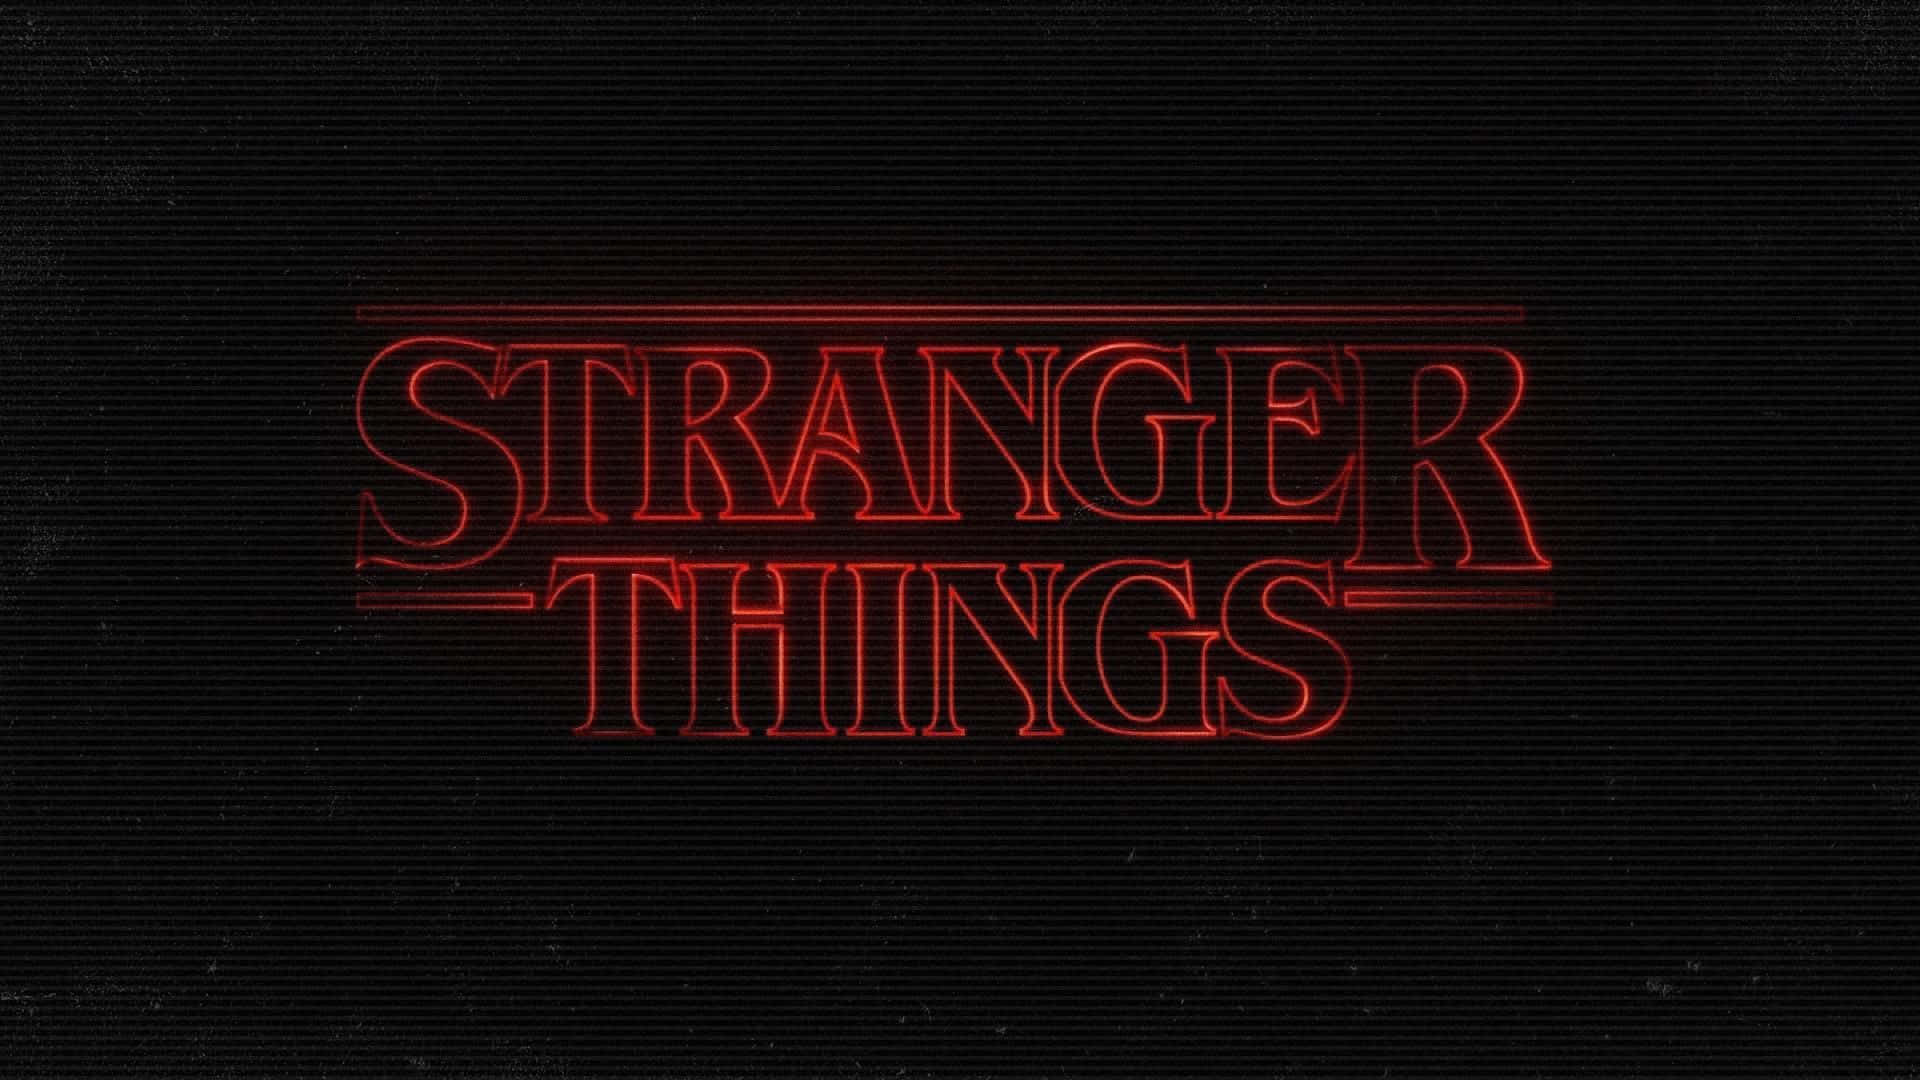 Stranger Things logo in red on a black background - Stranger Things